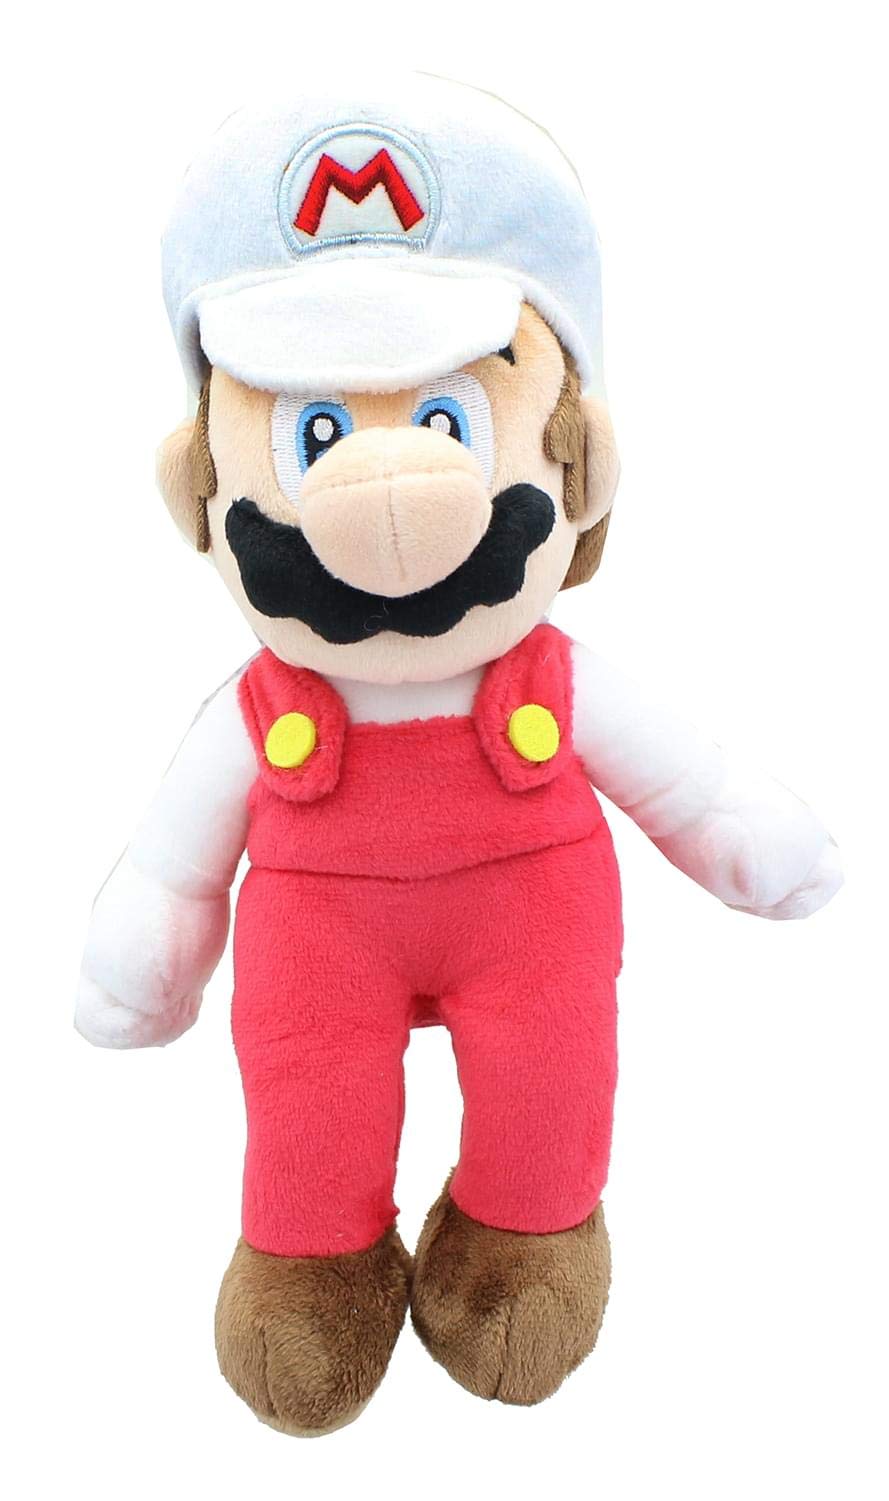 Little Buddy - 8" Fire Mario Plush (A01)